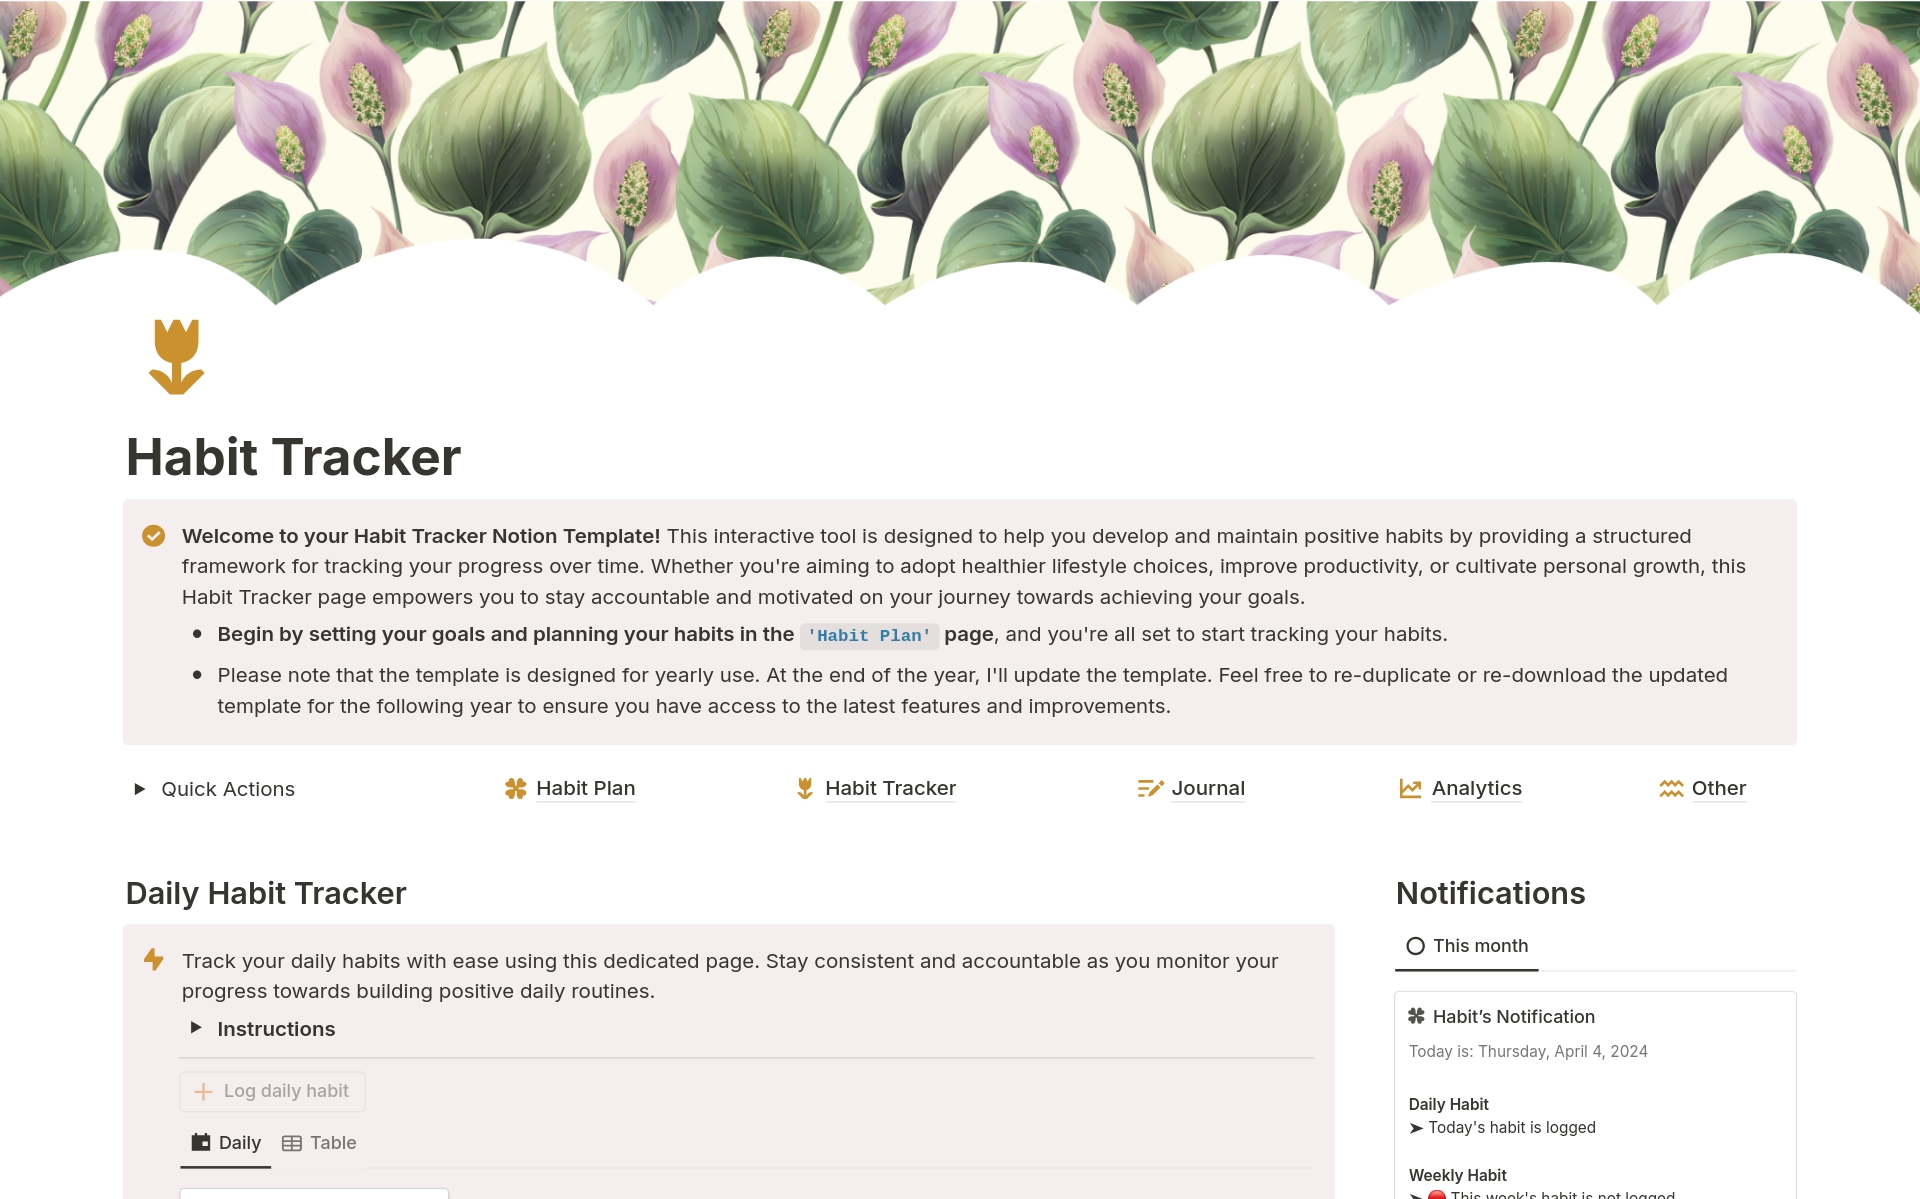 En forhåndsvisning av mal for Habit Tracker, Weekly Habit Tracker